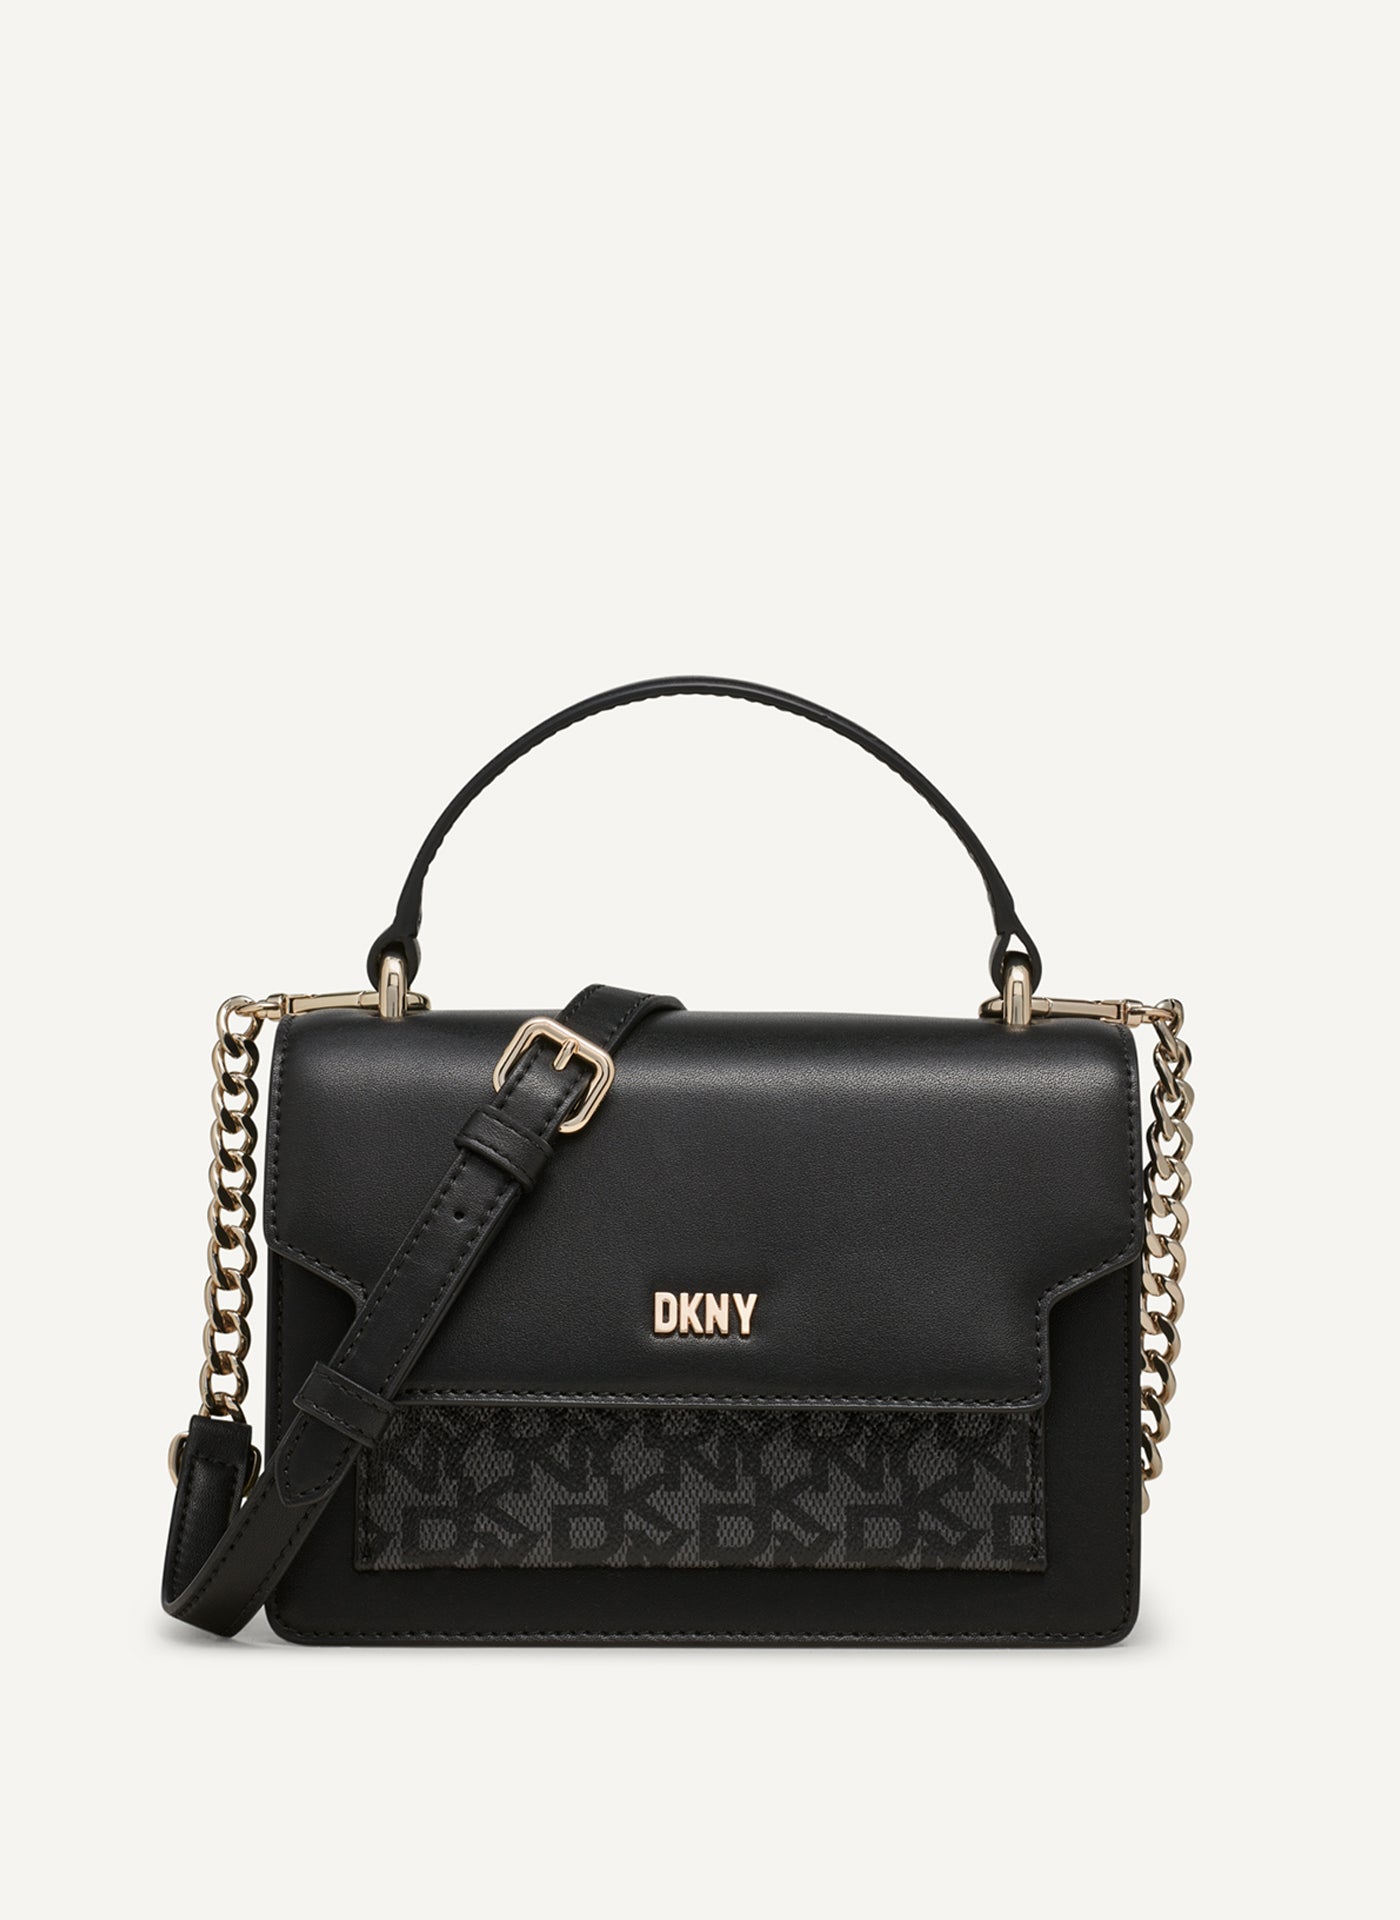 DKNY Millie Cross Body Bag - Light Charcoal/Black/Pebble